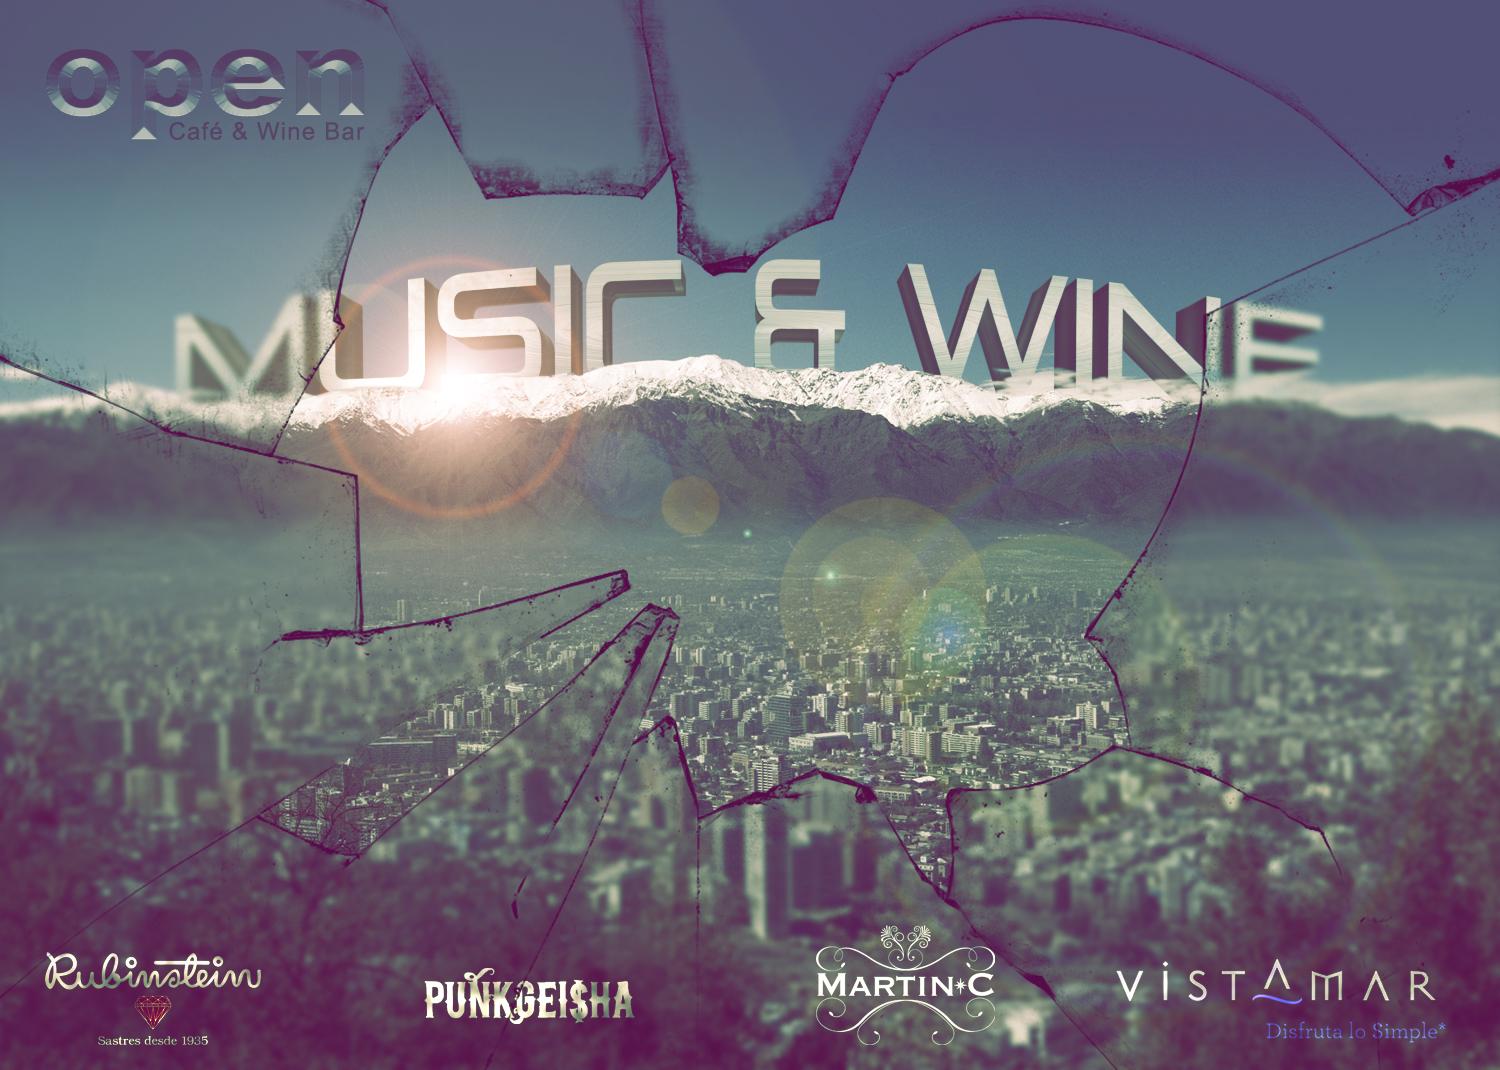 MUSIC & WINE > PUNKGEISHA + OPEN CAFÉ & WINE BAR